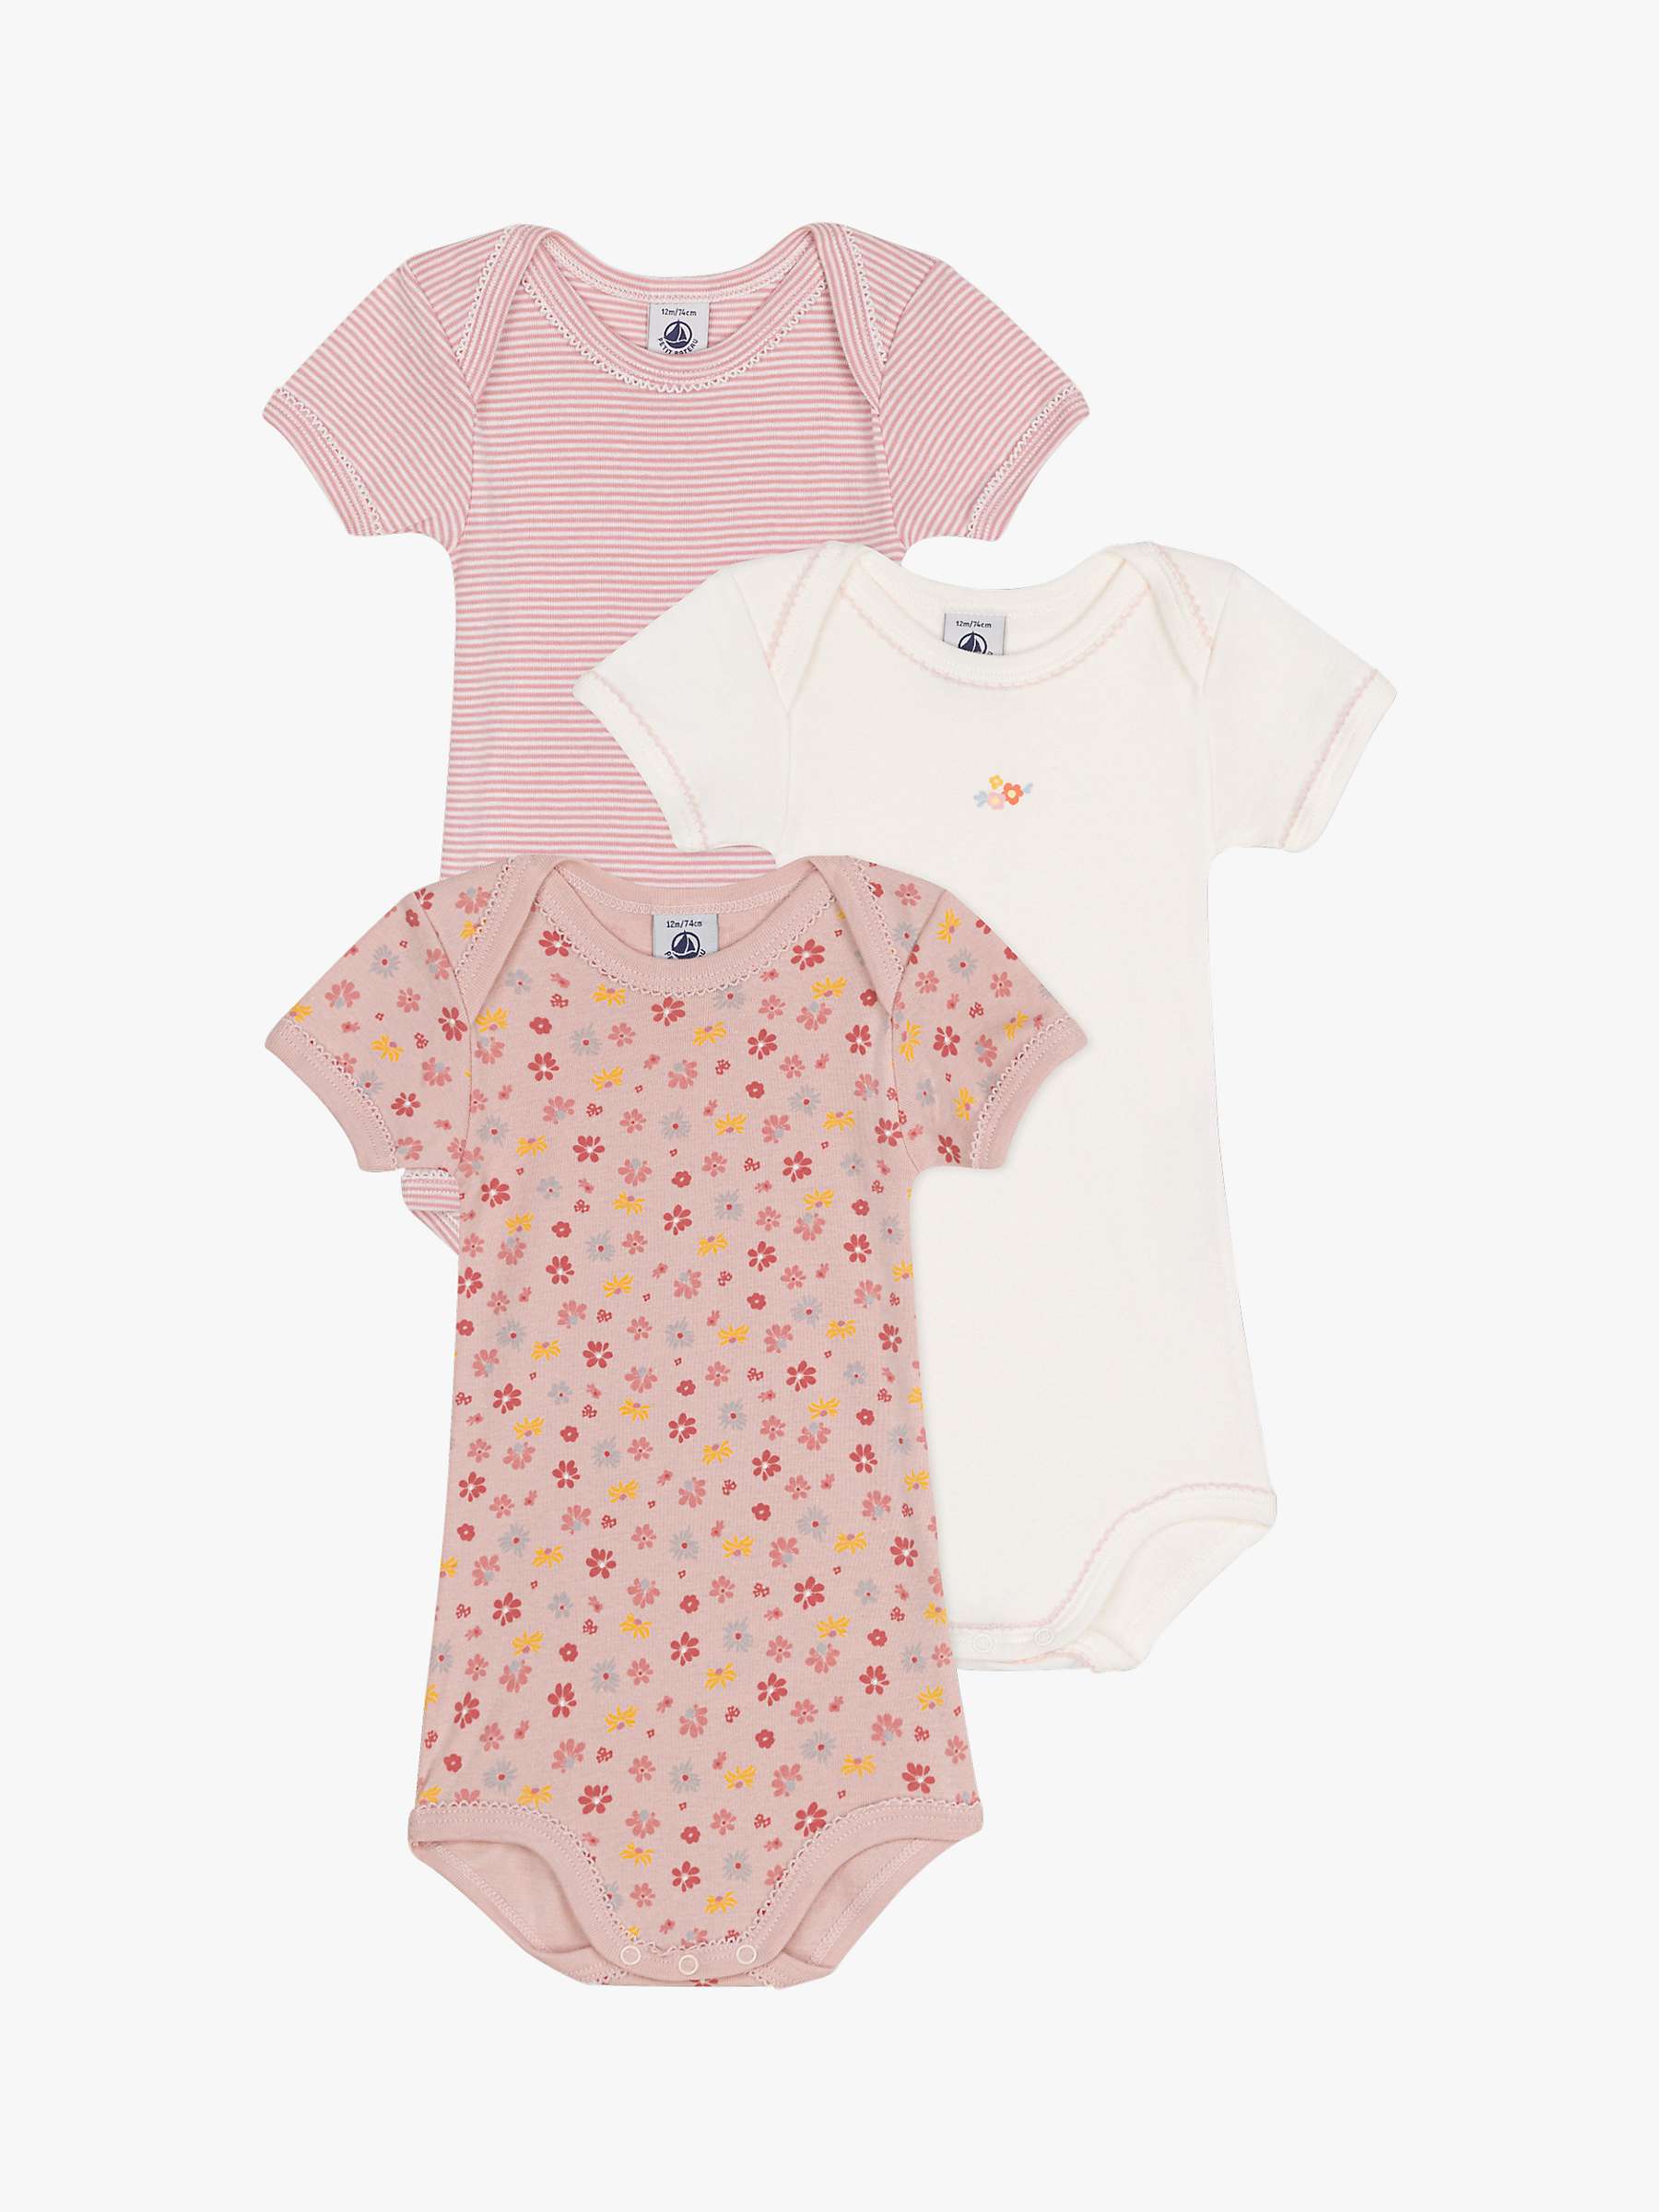 Buy Petit Bateau Baby Floral/Stripe Short Sleeve Bodysuits, Pack of 3, Pink/Multi Online at johnlewis.com